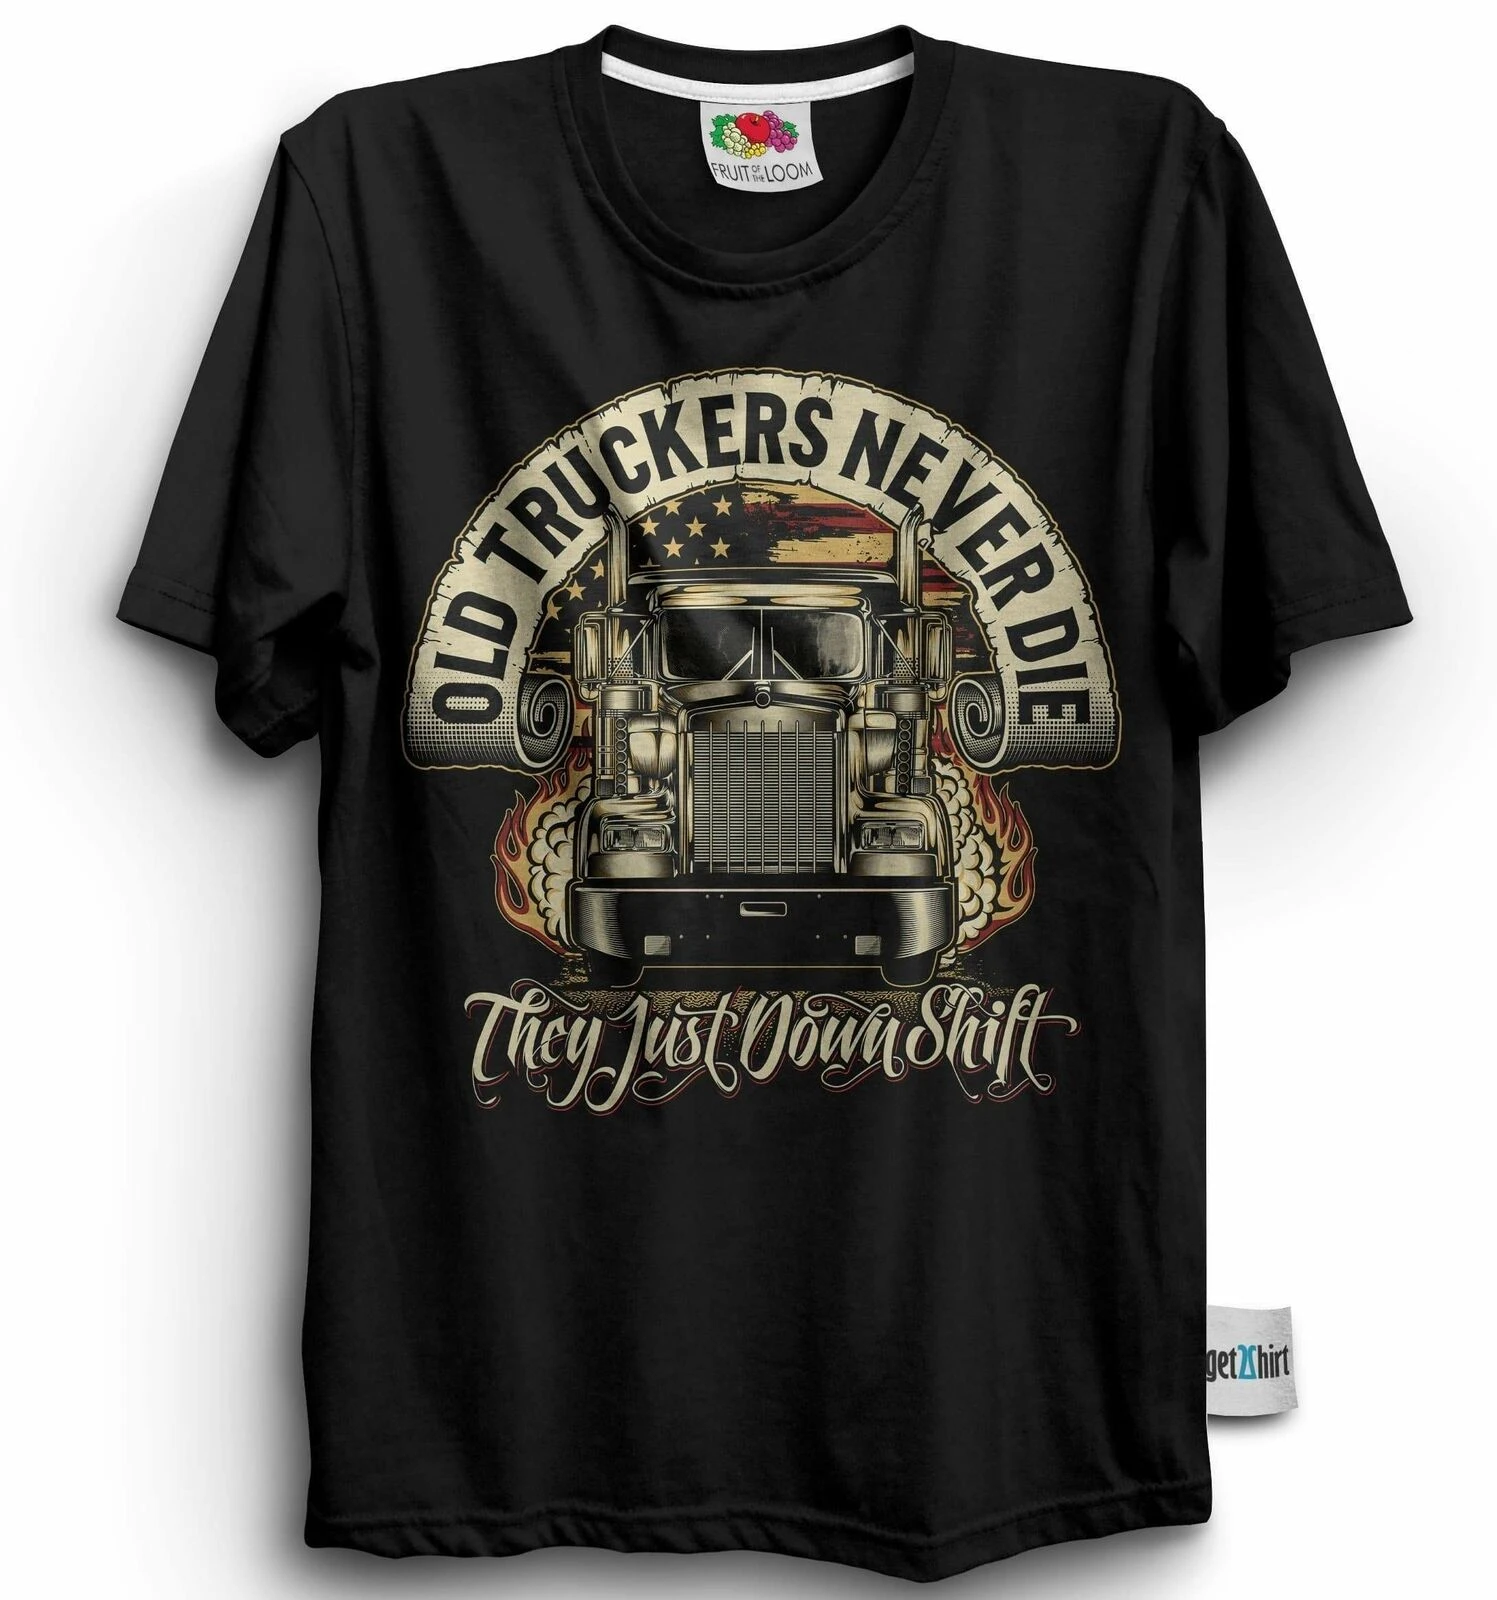 Trucker t shirts amazon